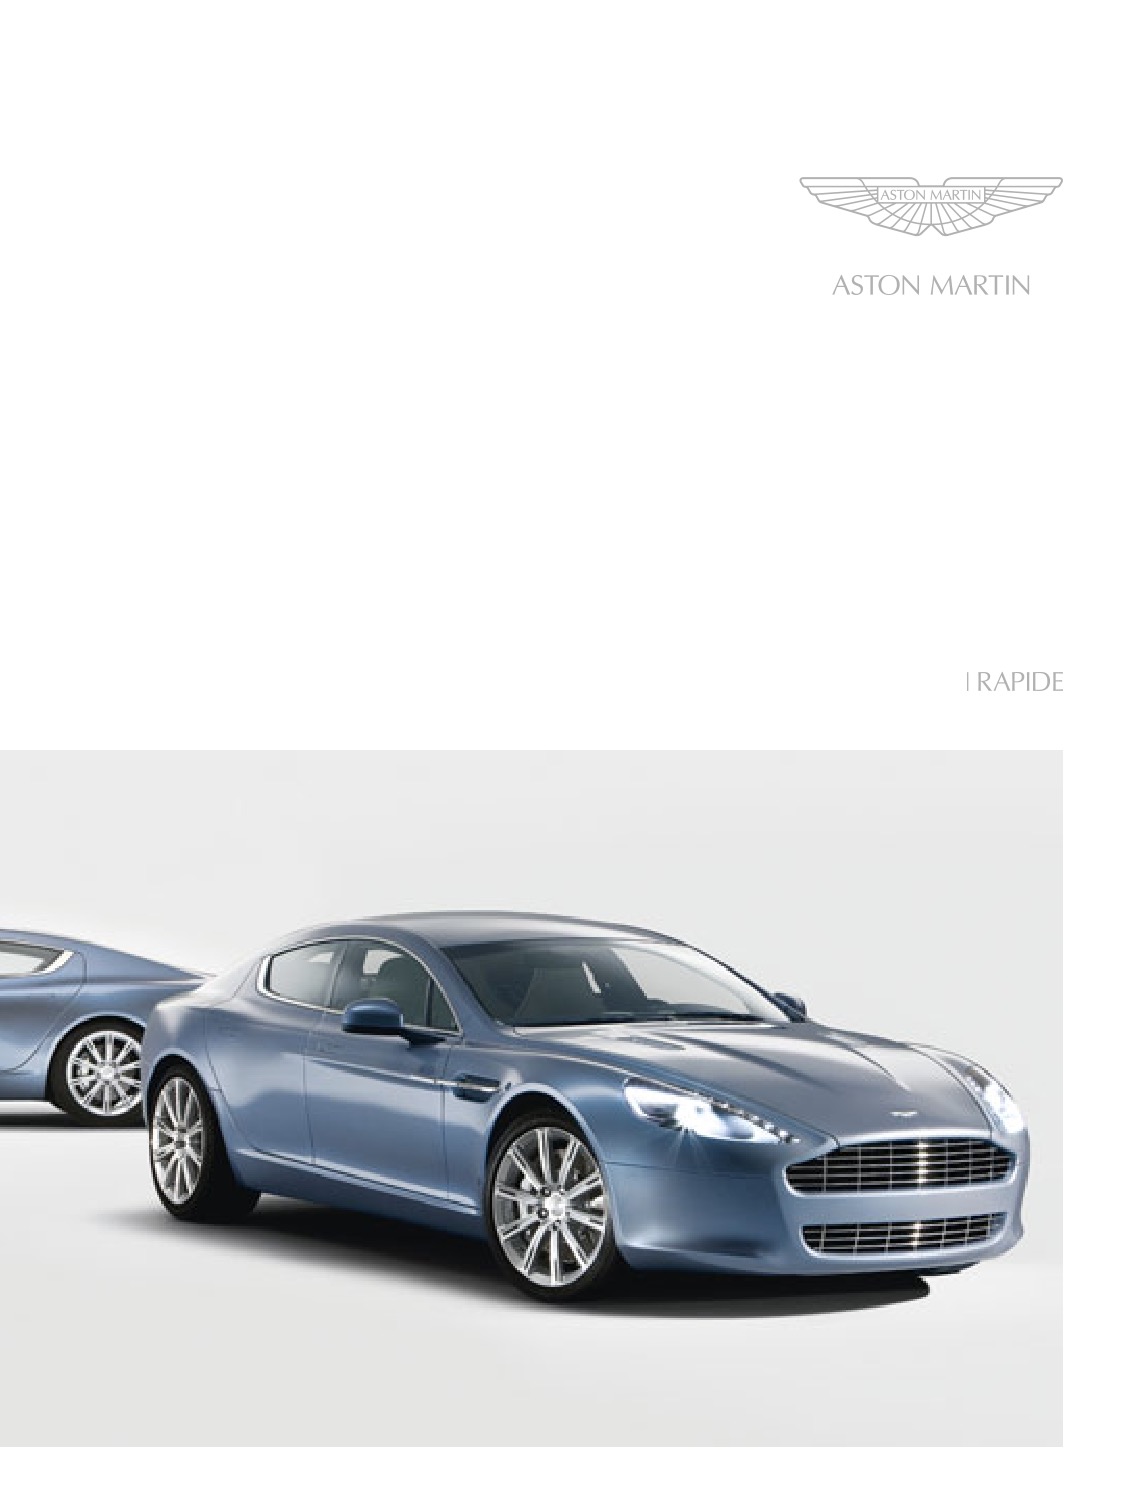 2010 Aston Martin Rapide Brochure